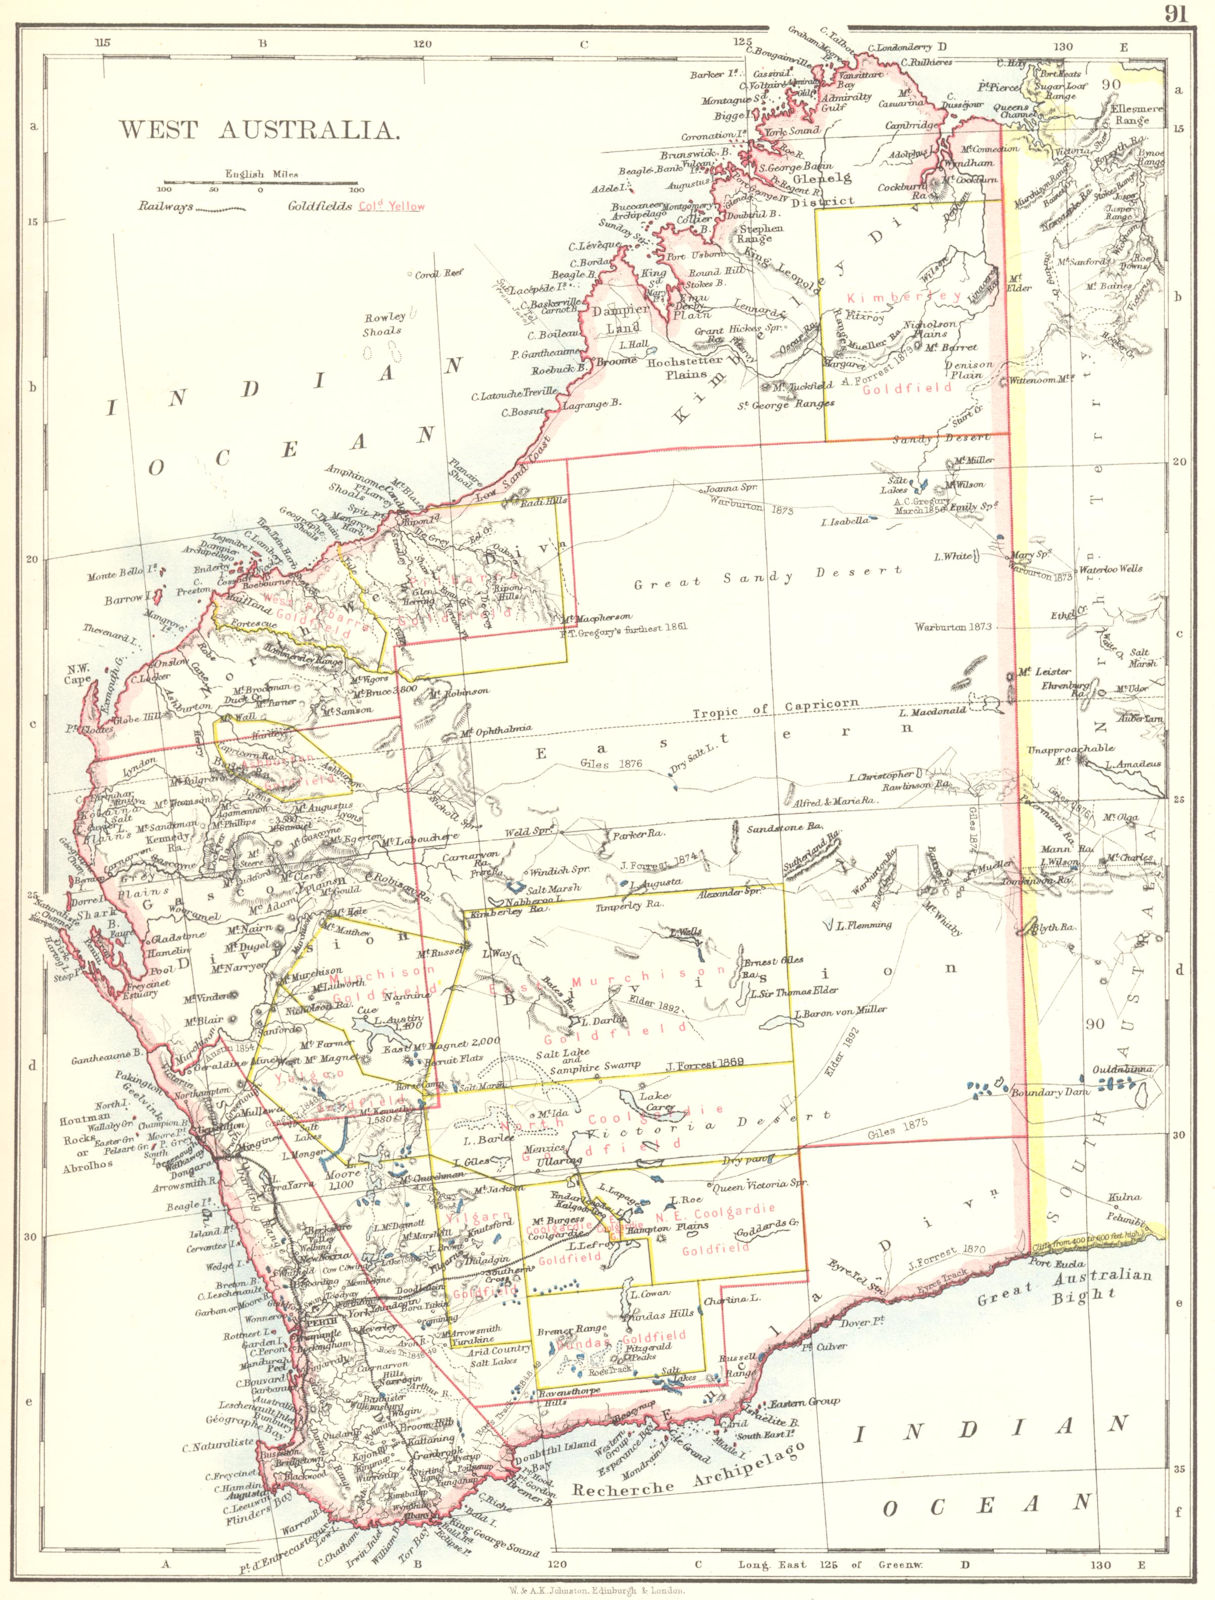 WEST AUSTRALIA. Goldfields Explorers route Giles Forrest Warburton Roe 1899 map